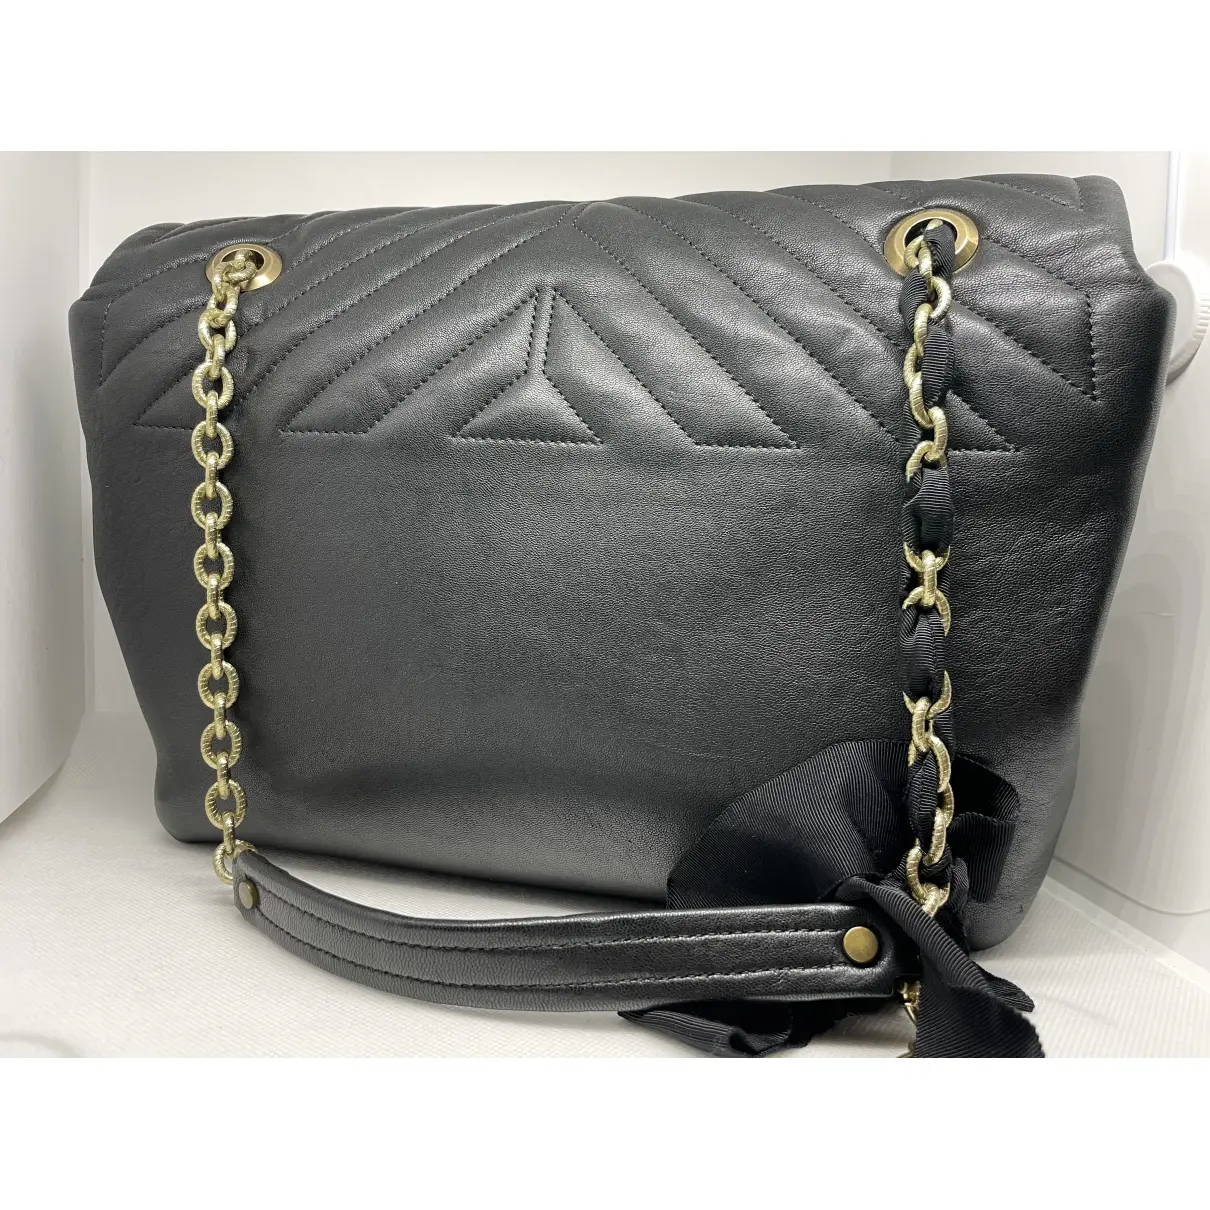 Buy Lanvin Happy leather bag online